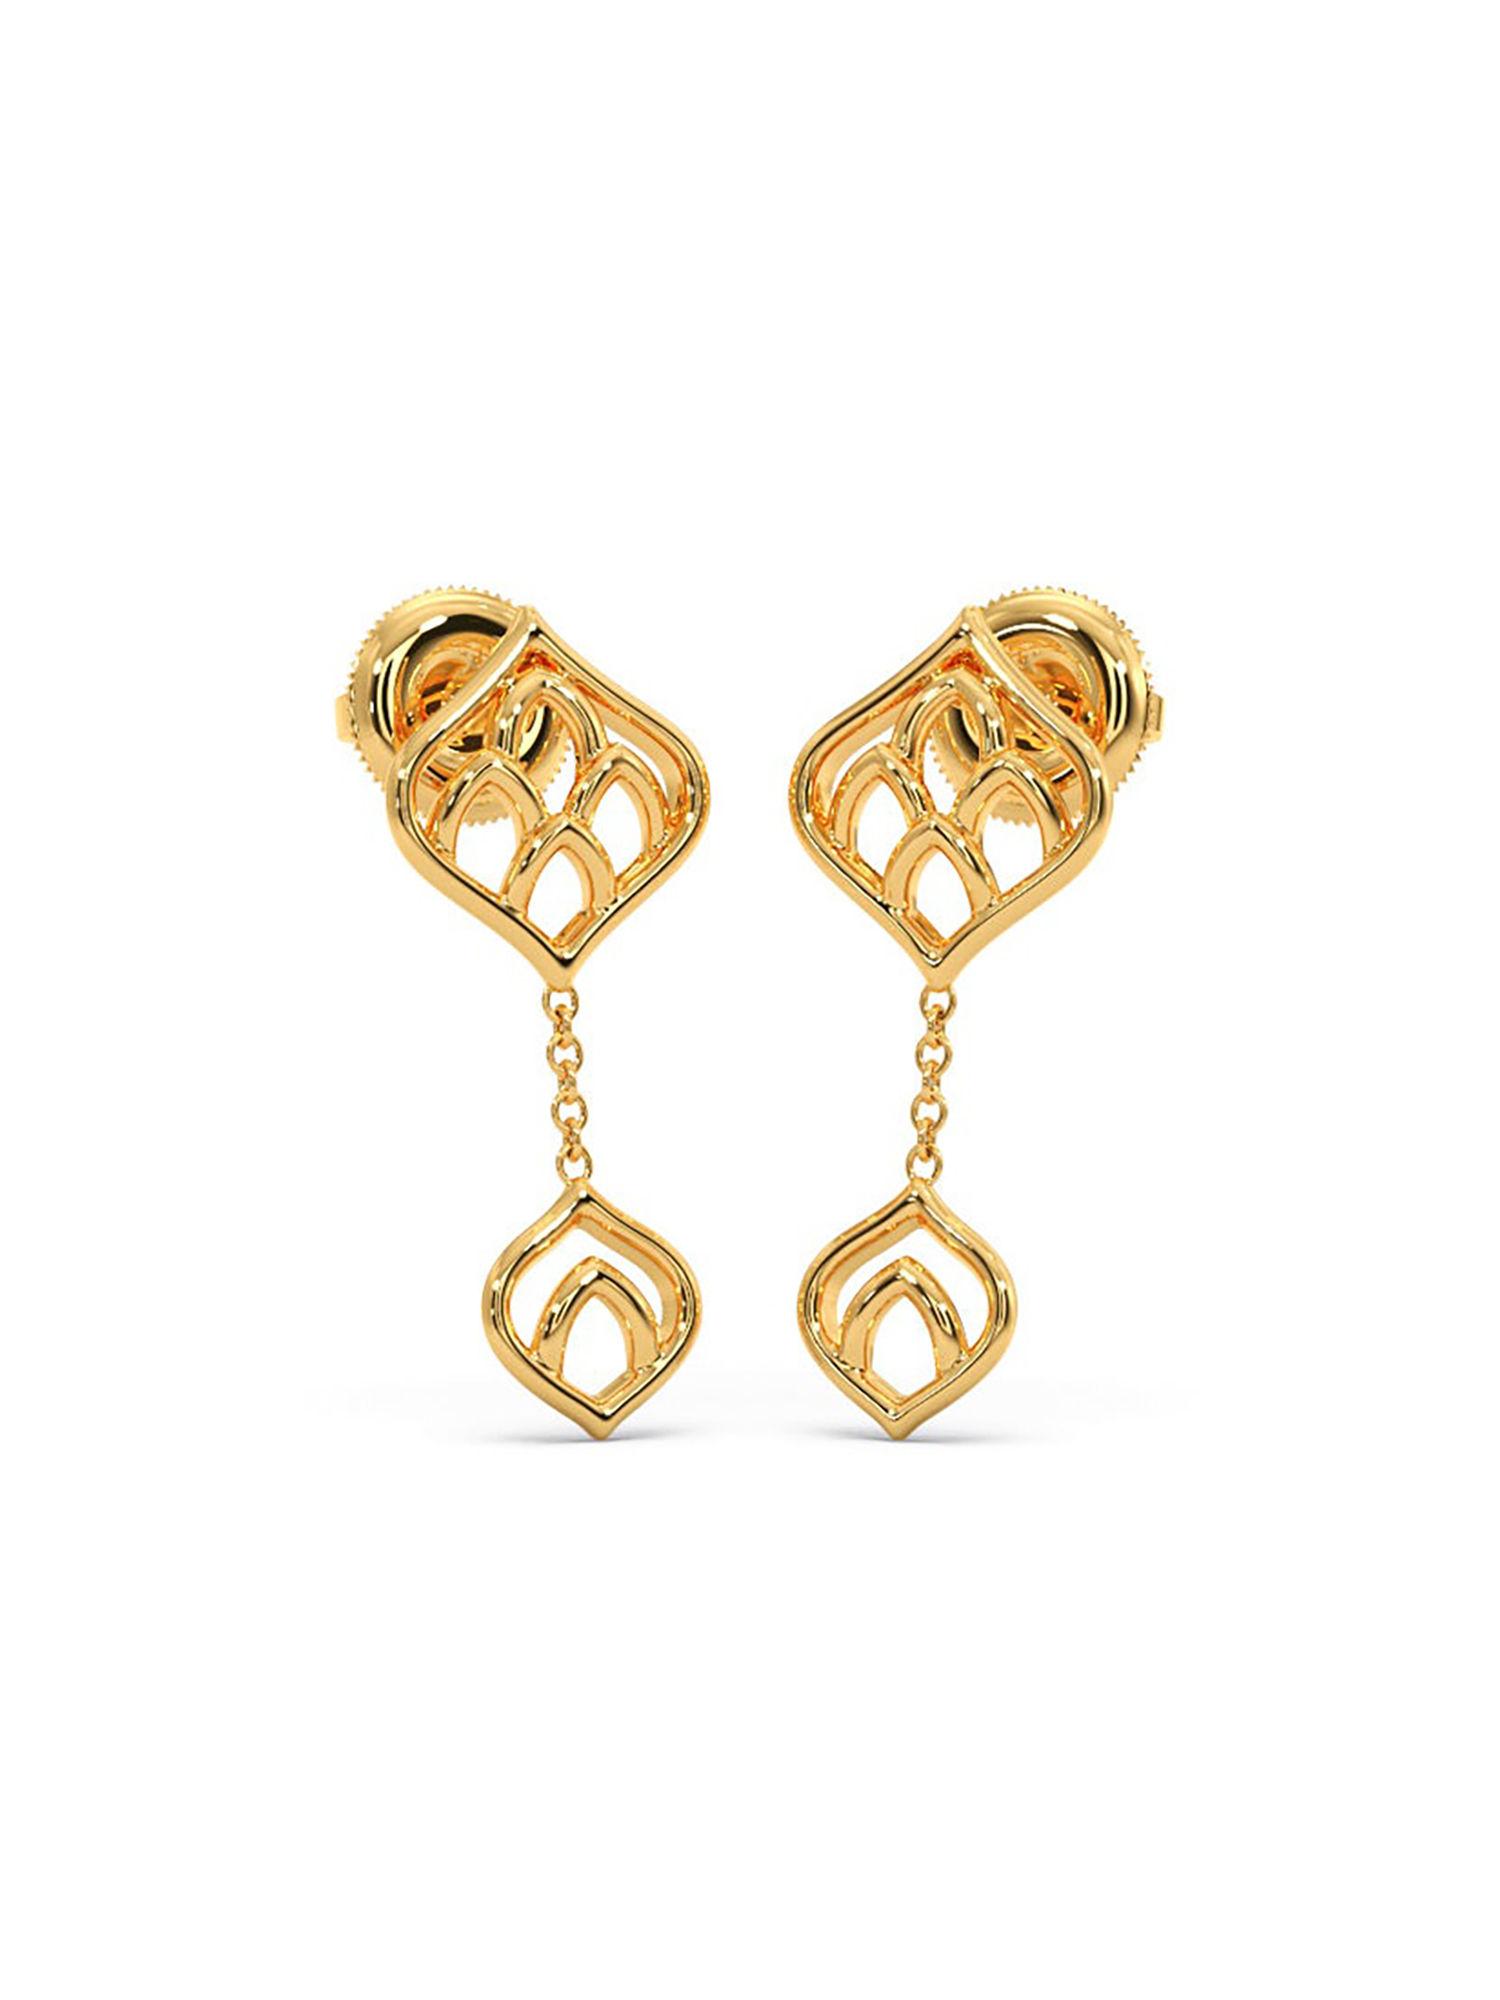 18k (750) bis hallmark yellow gold earring for women